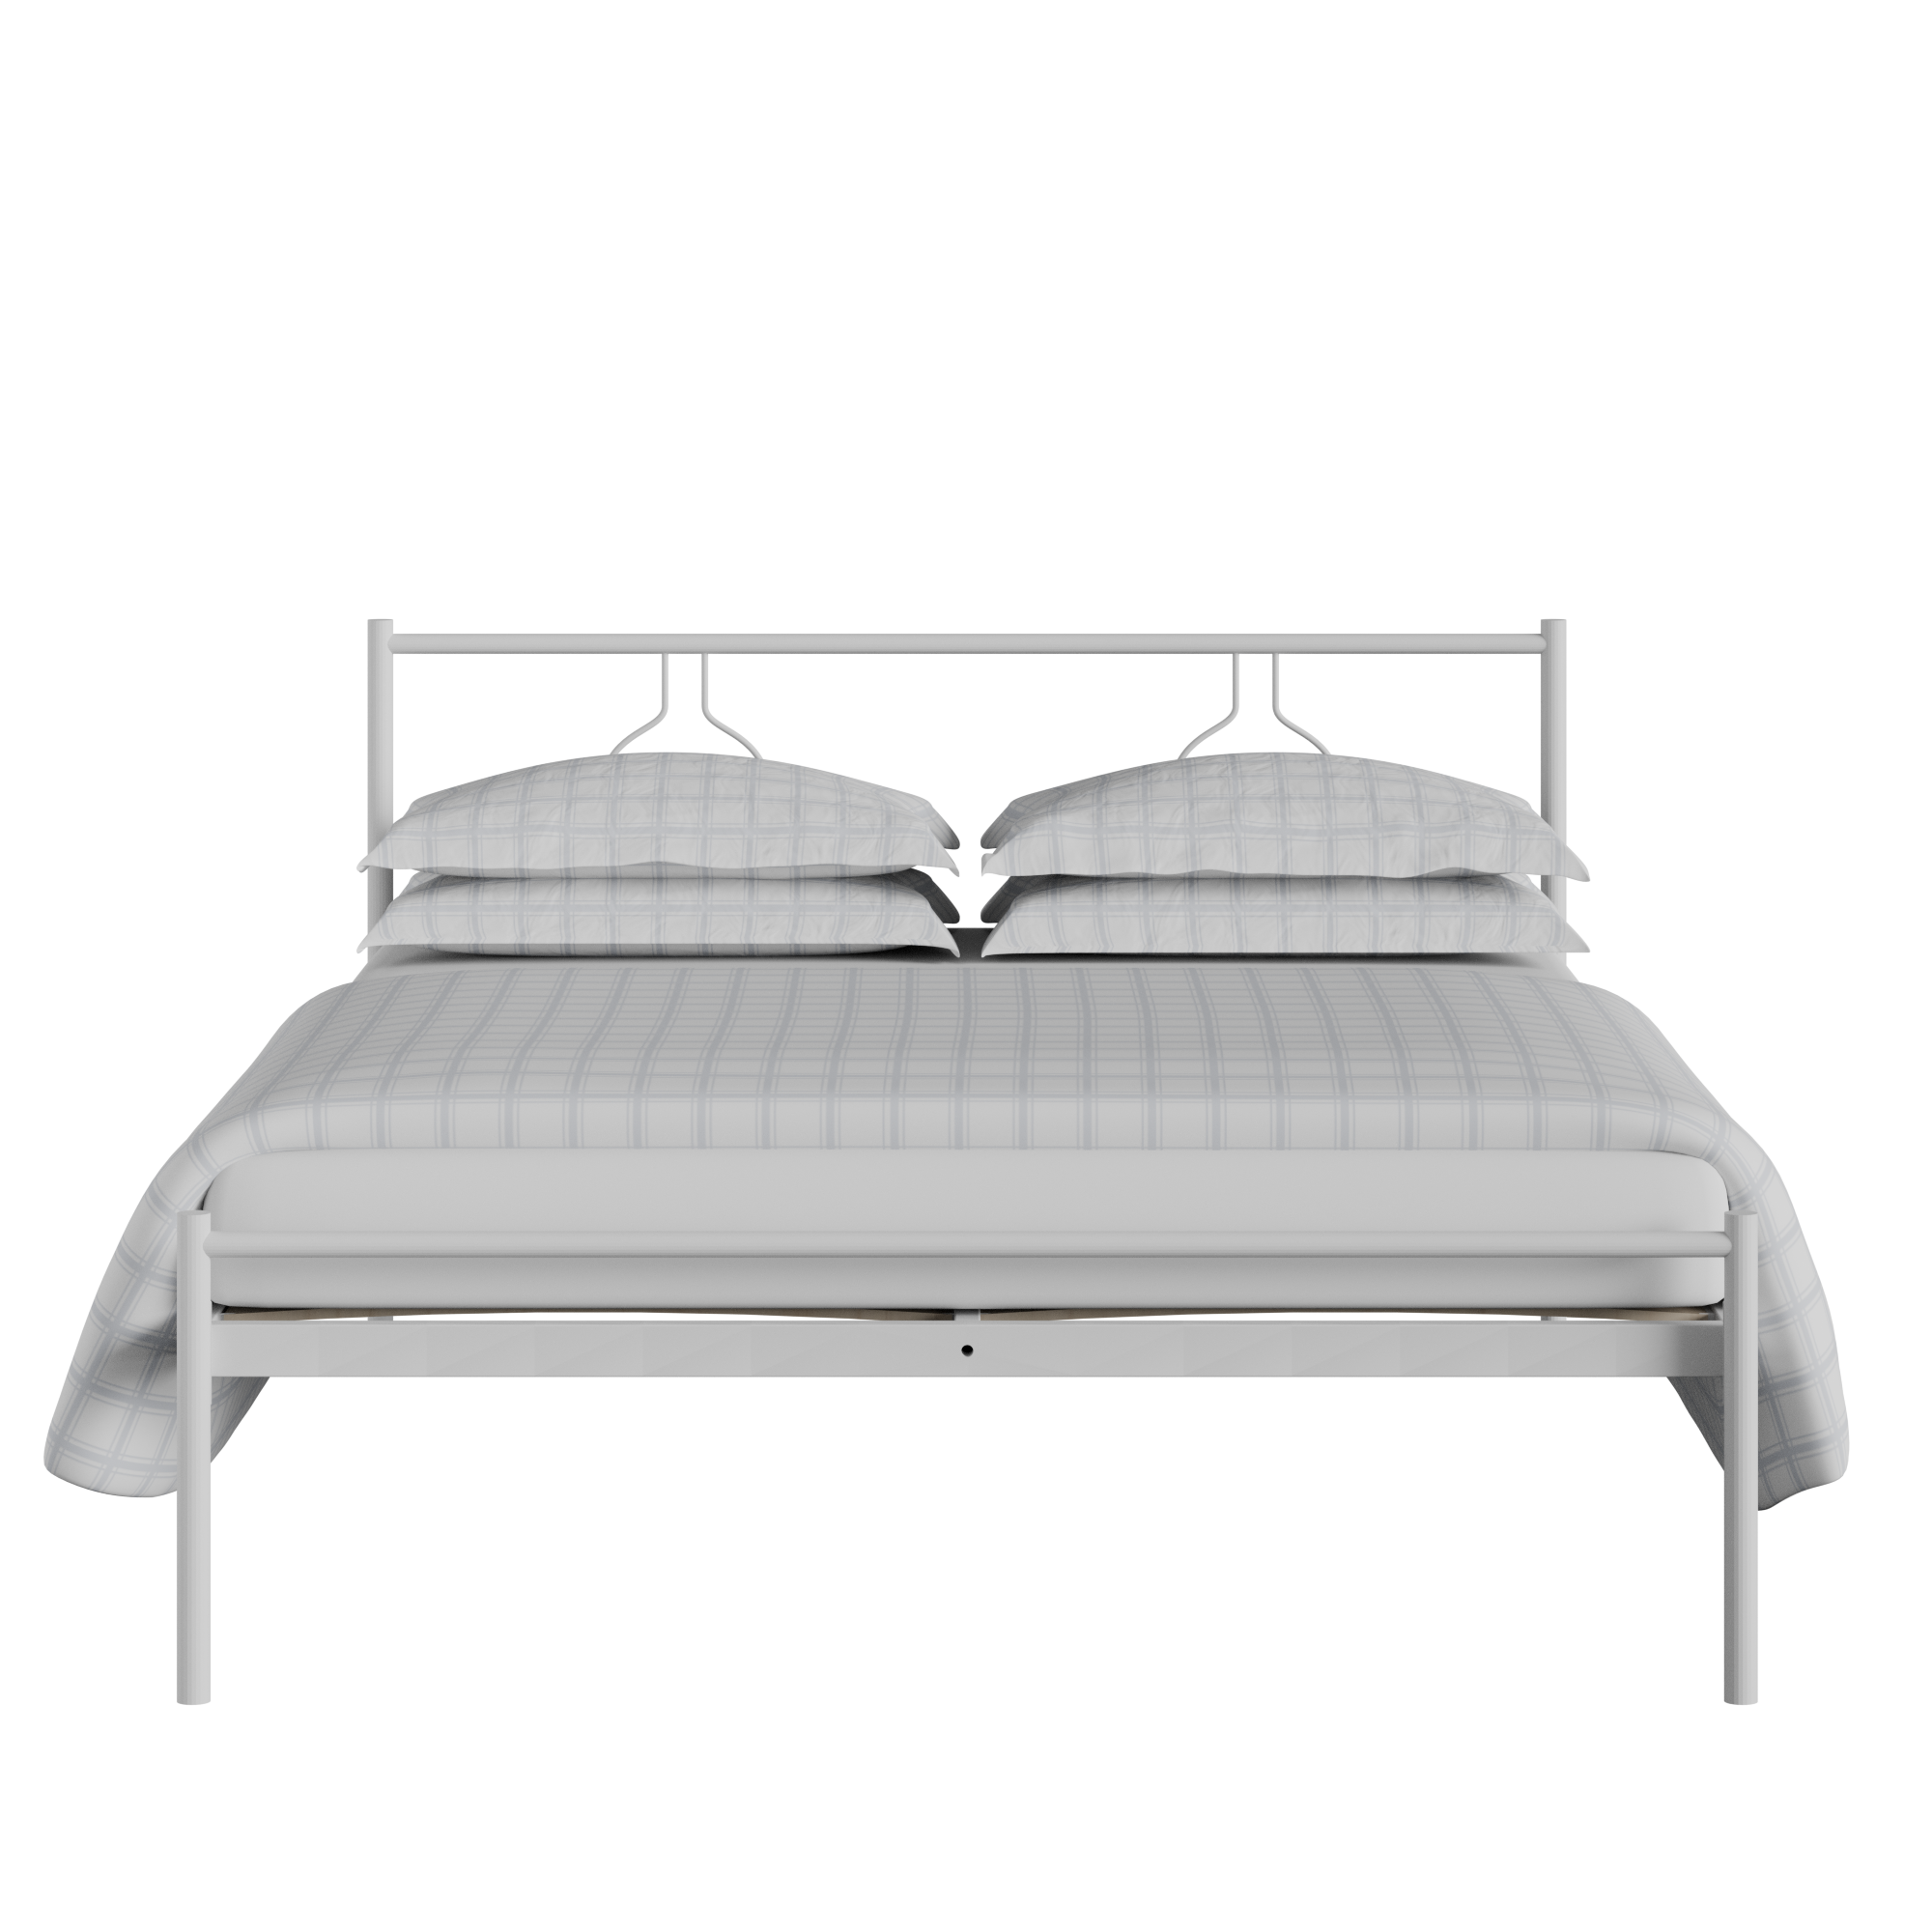 Meiji iron/metal bed in white